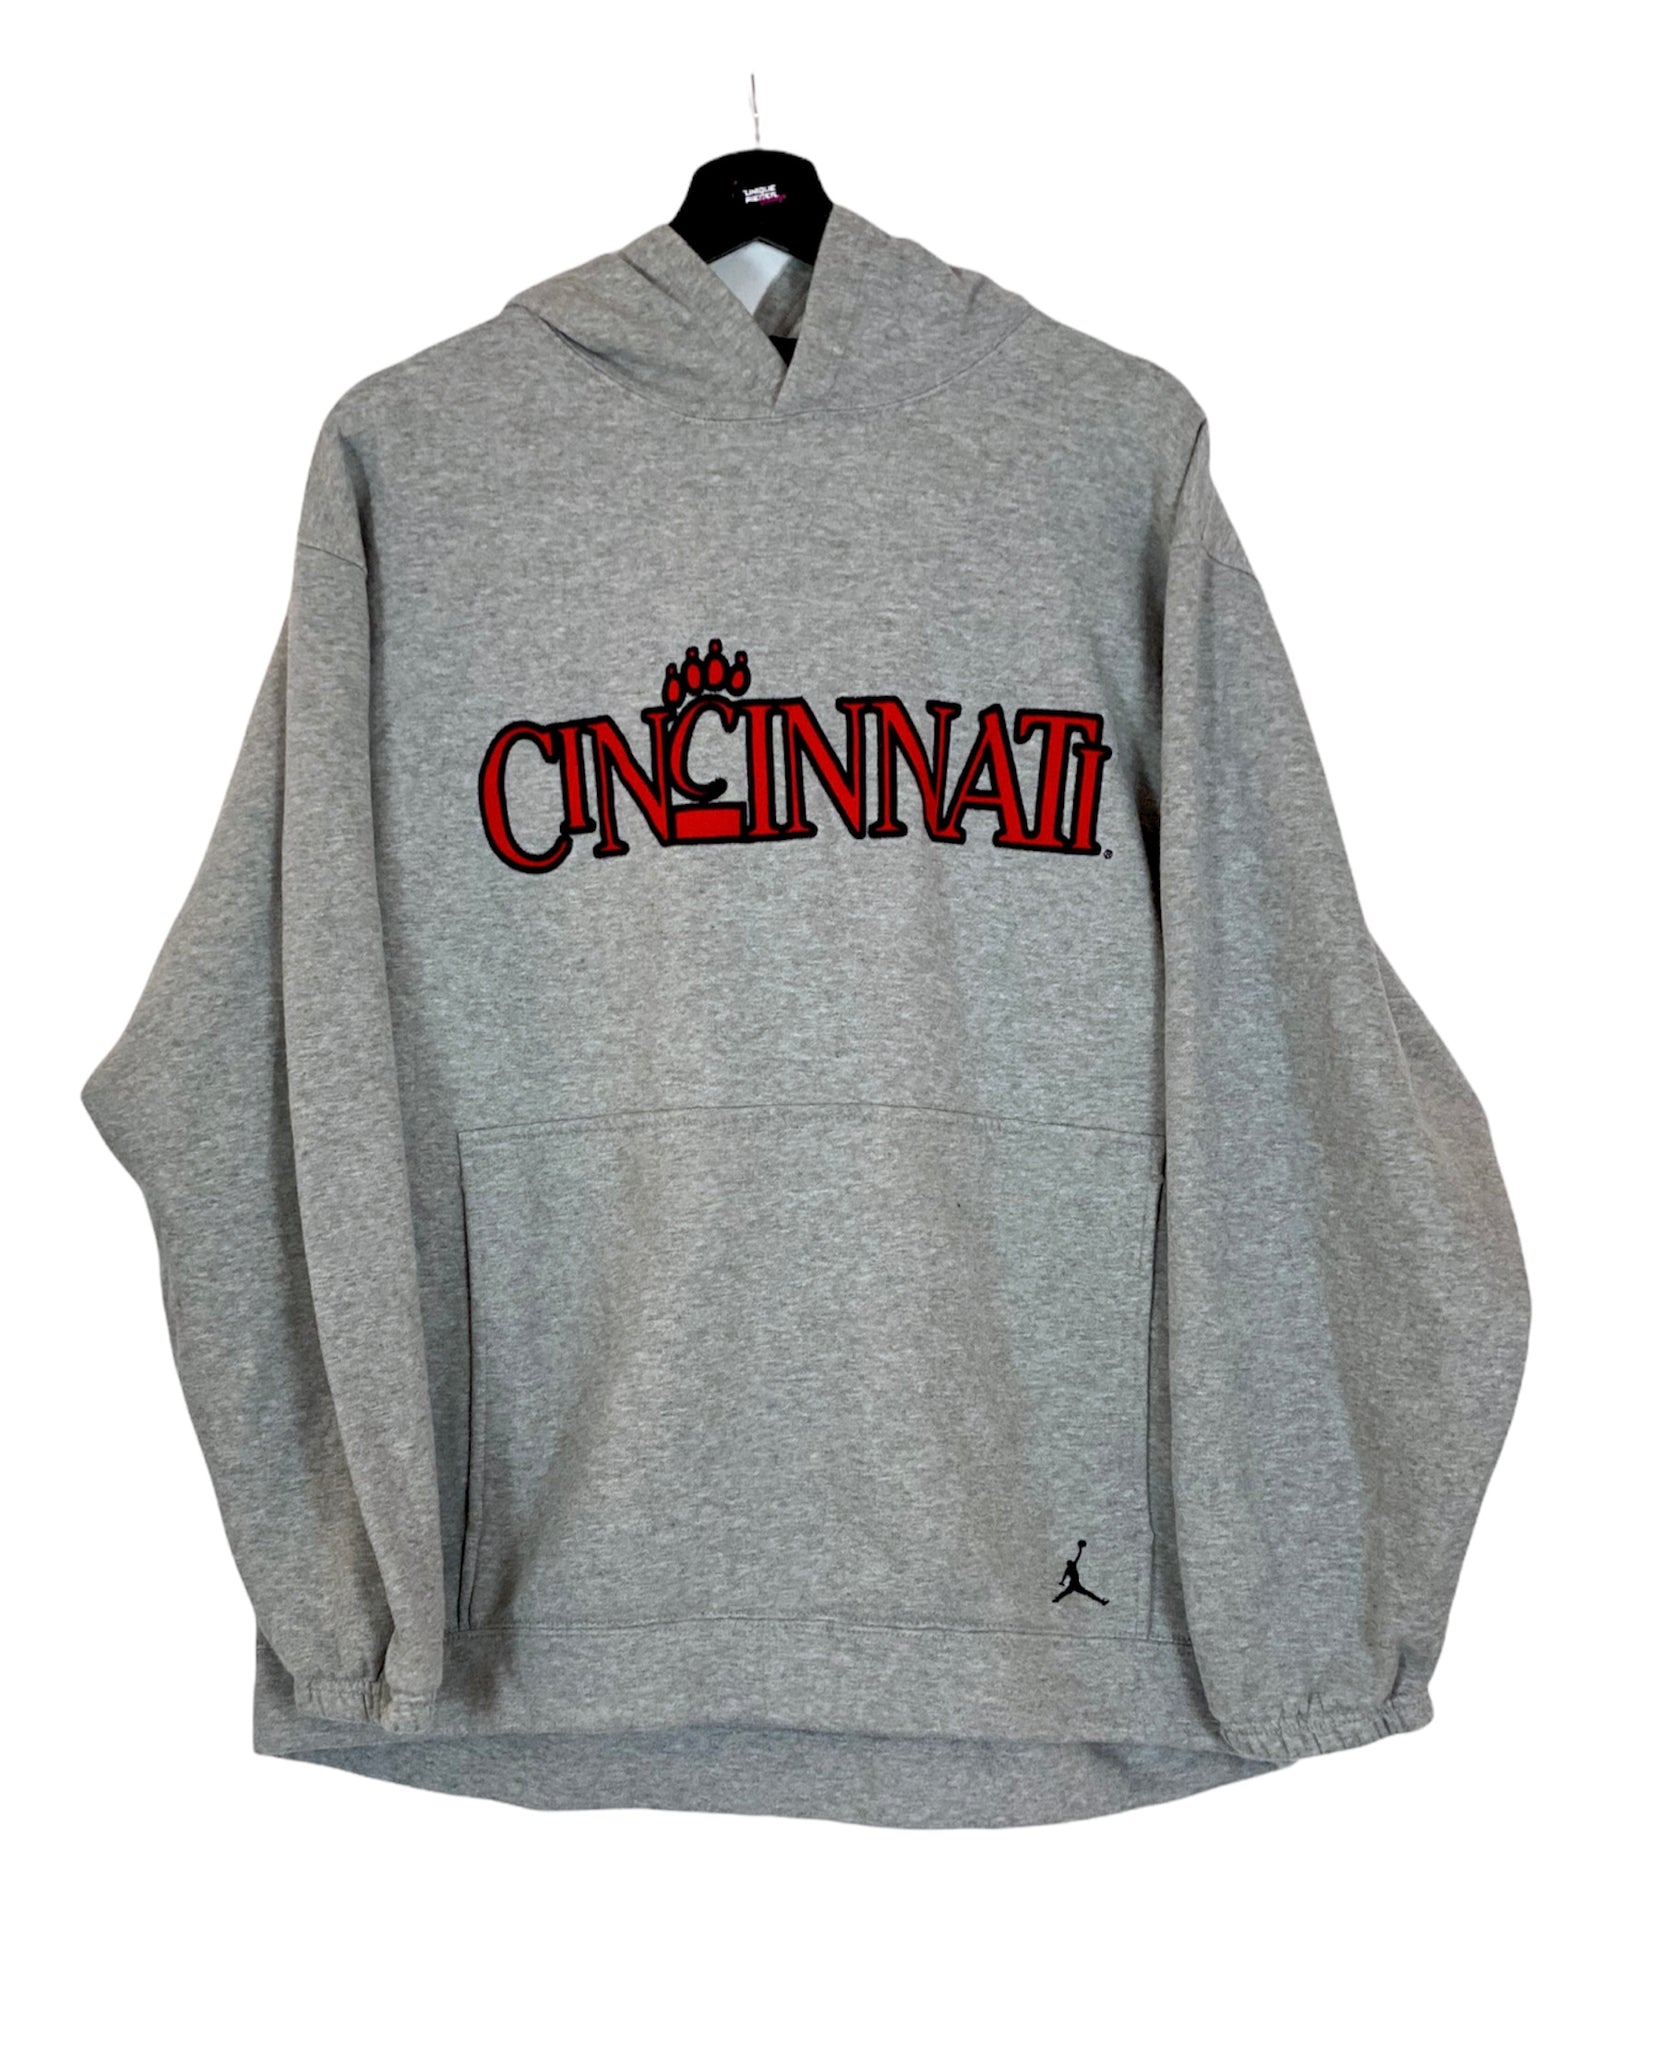 Nike Jordan Team Cincinnati Bearcats Sweatshirt Hoodie Gray/Red/Black. Size M G freeshipping - Unique Pieces Vintage